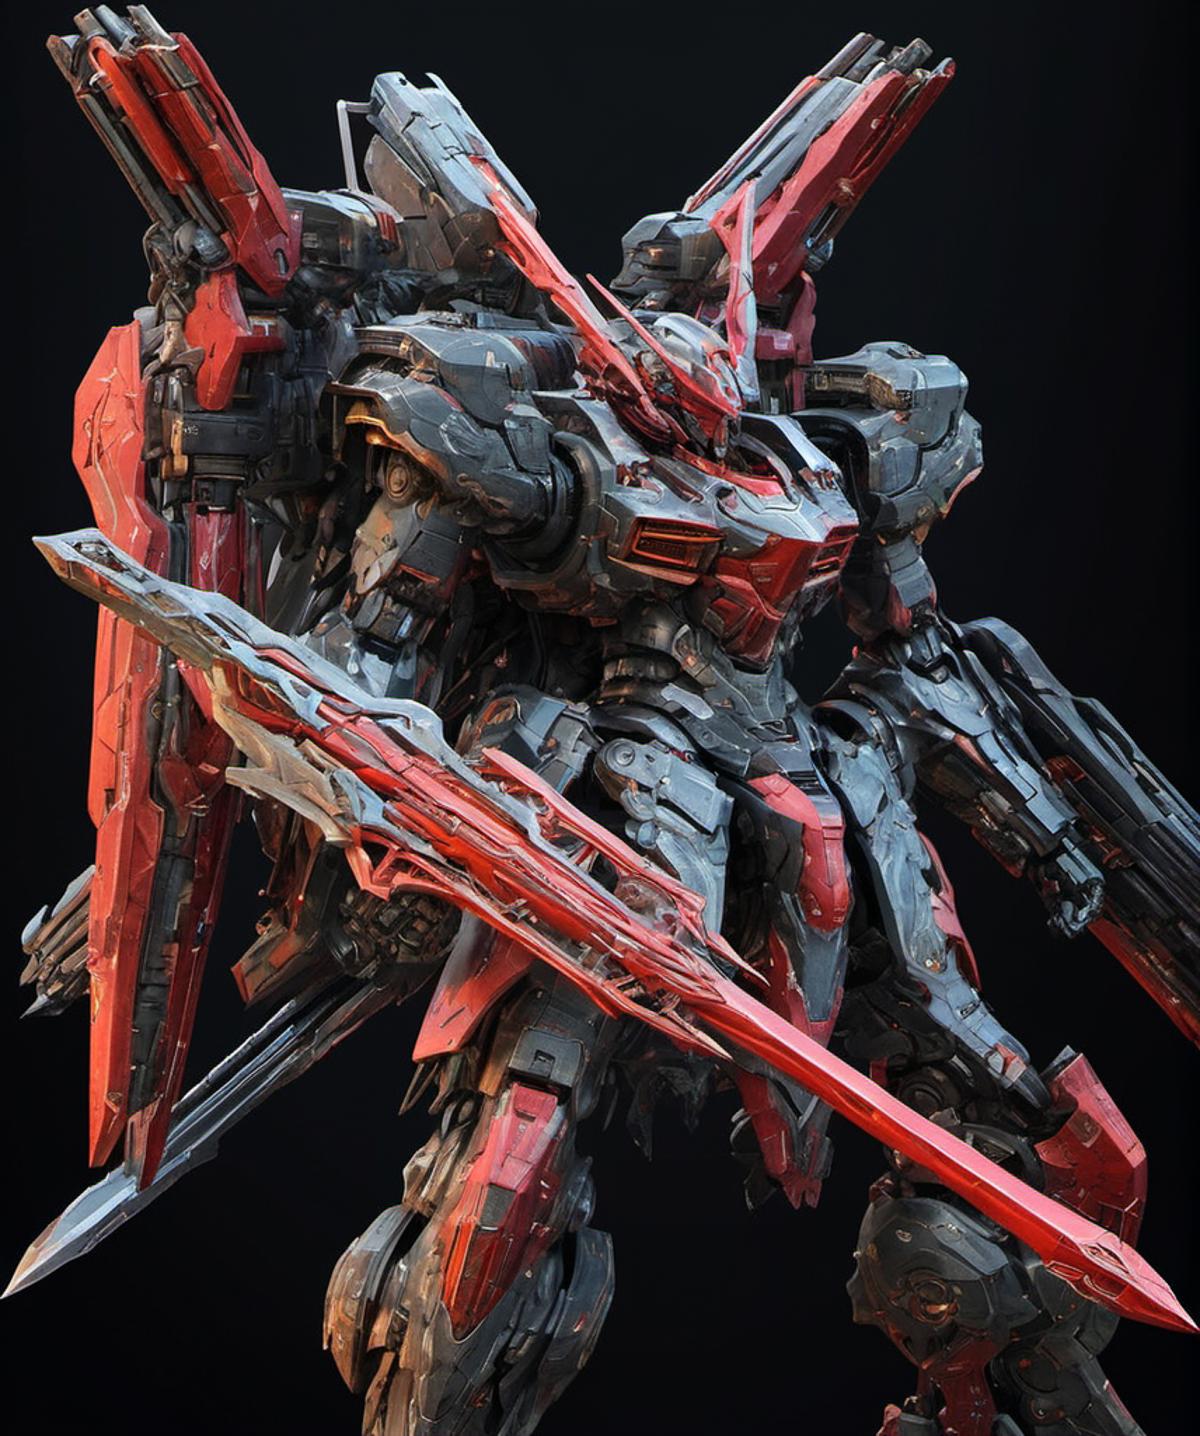 Super robot diffusion XL (Gundam, EVA, ARMORED CORE, BATTLE TECH like mecha lora) image by Dokitai